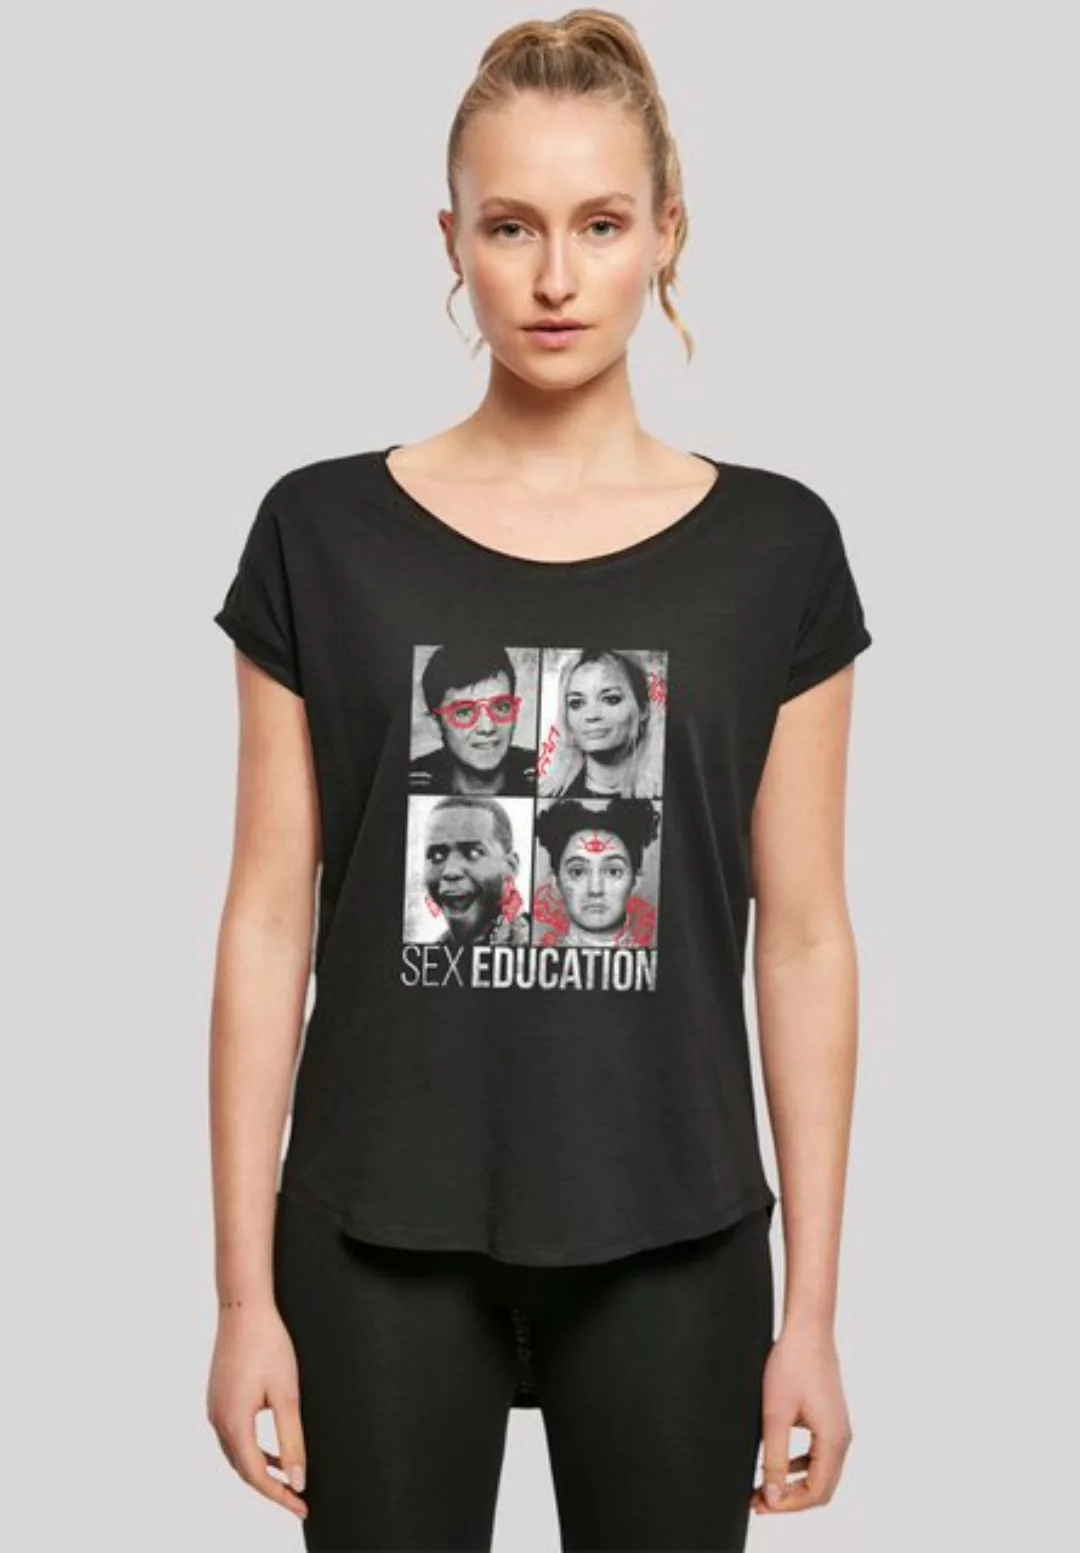 F4NT4STIC T-Shirt Sex Education Class Photos Netflix TV Series Premium Qual günstig online kaufen